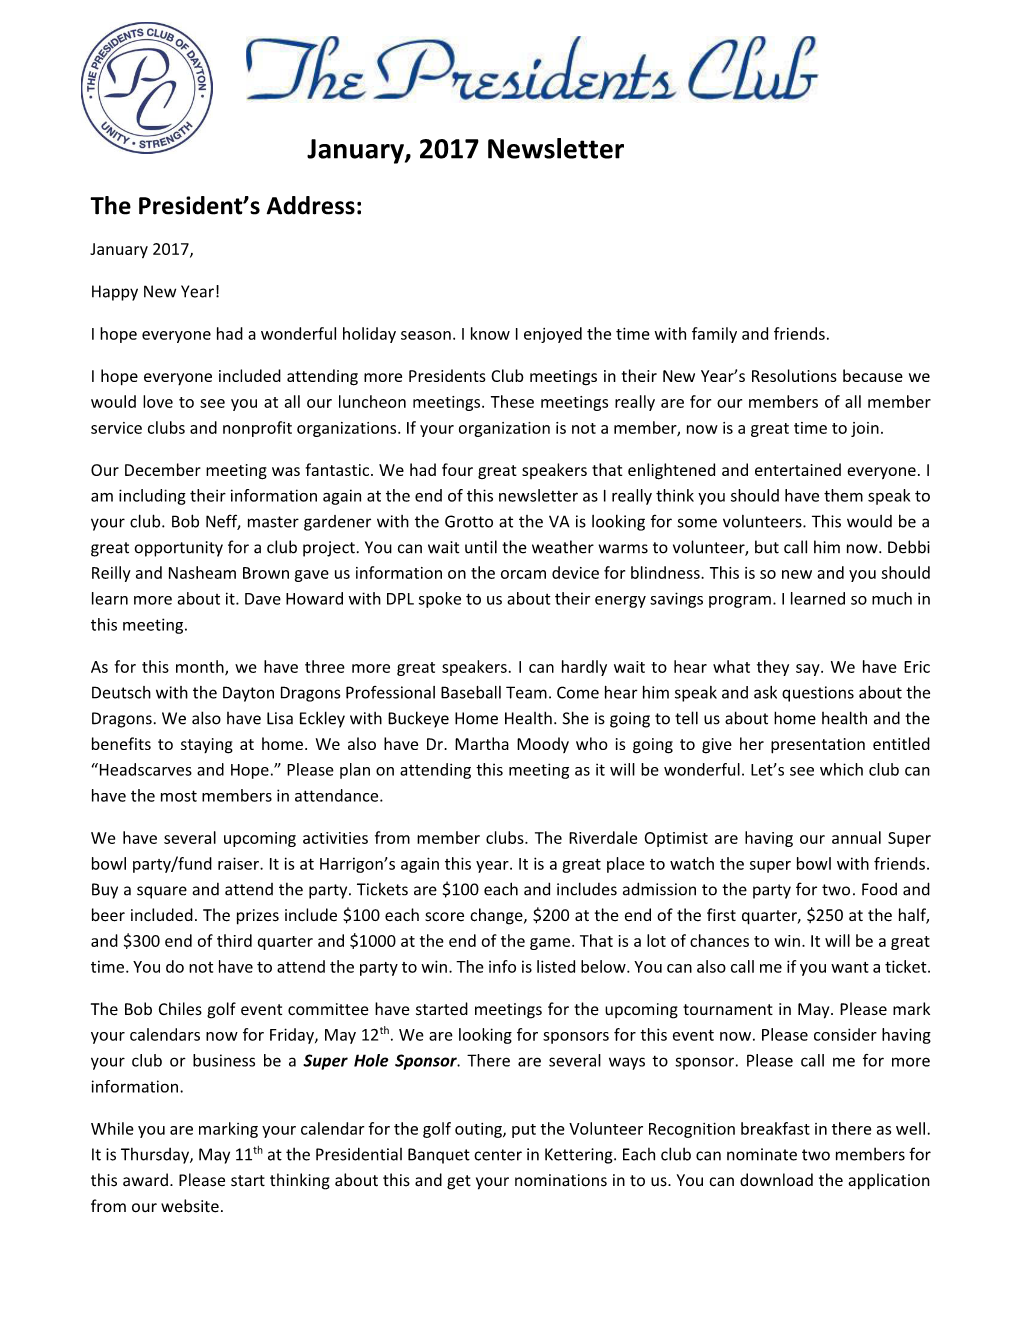 The President's Address